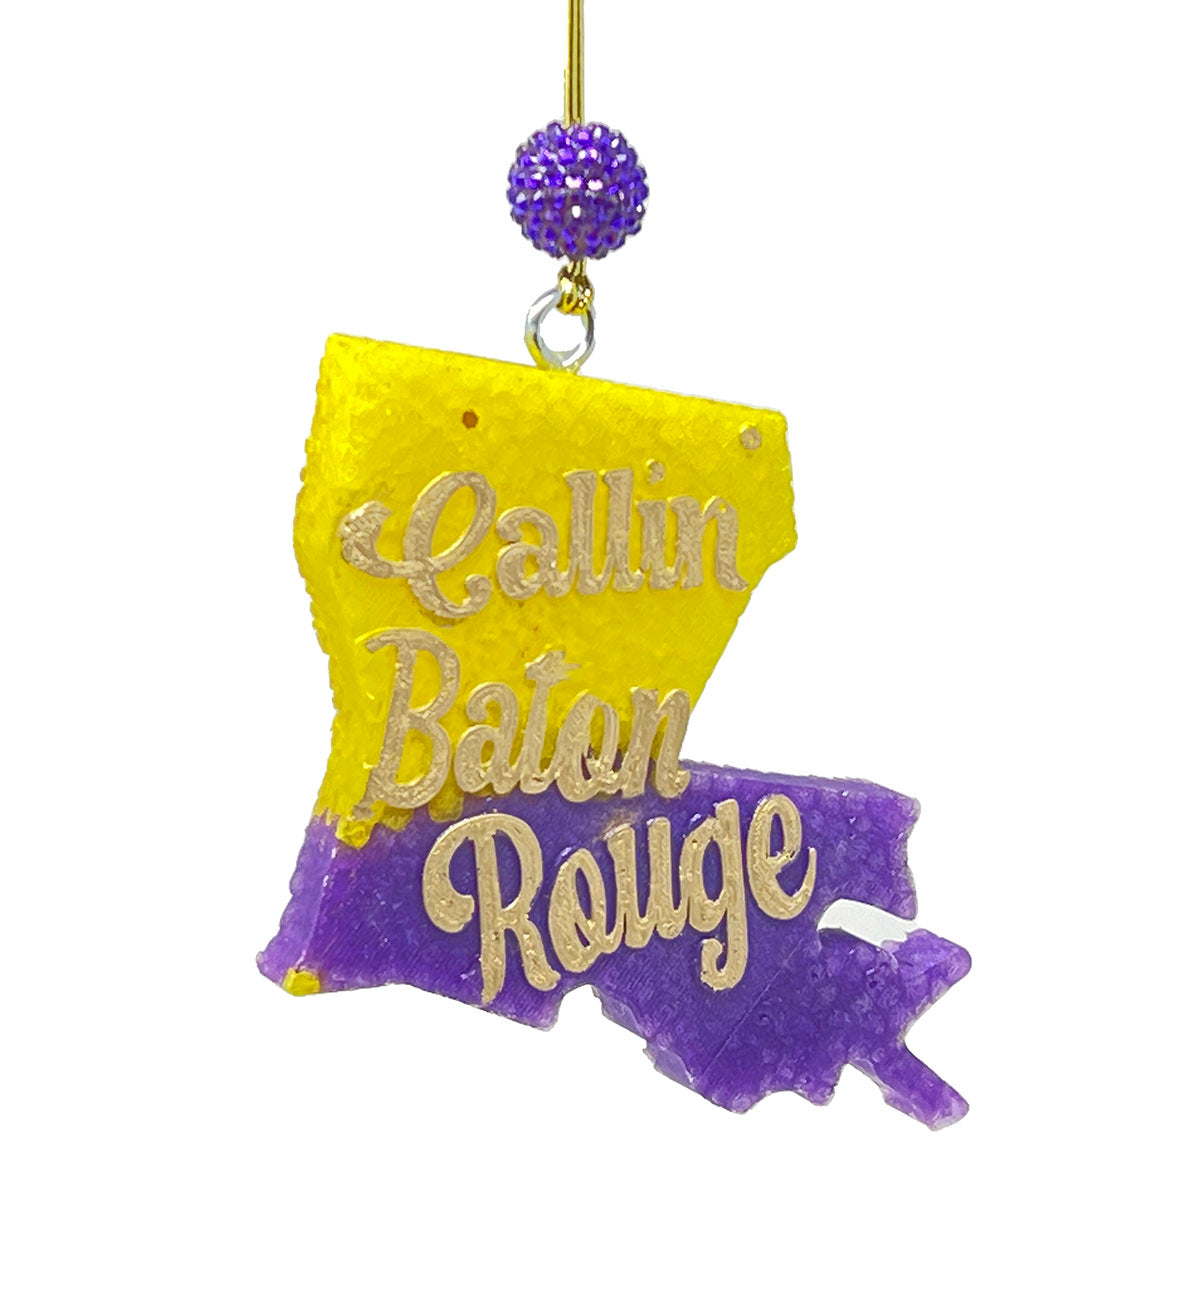 Fresh-E - Calling' Baton Rouge